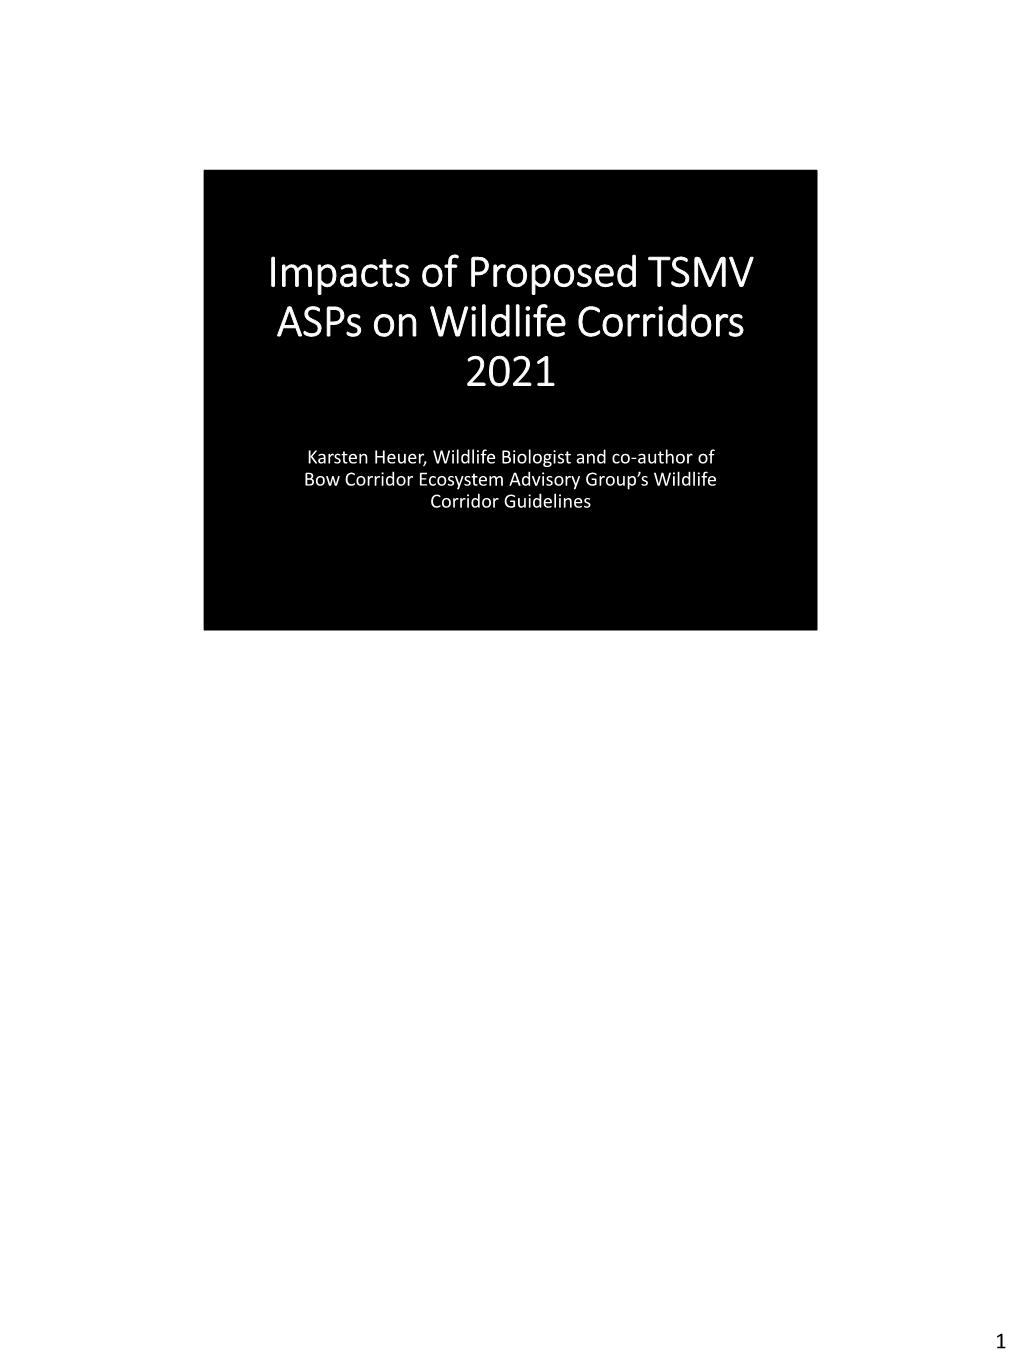 Impacts of Proposed TSMV Asps on Wildlife Corridors 2021